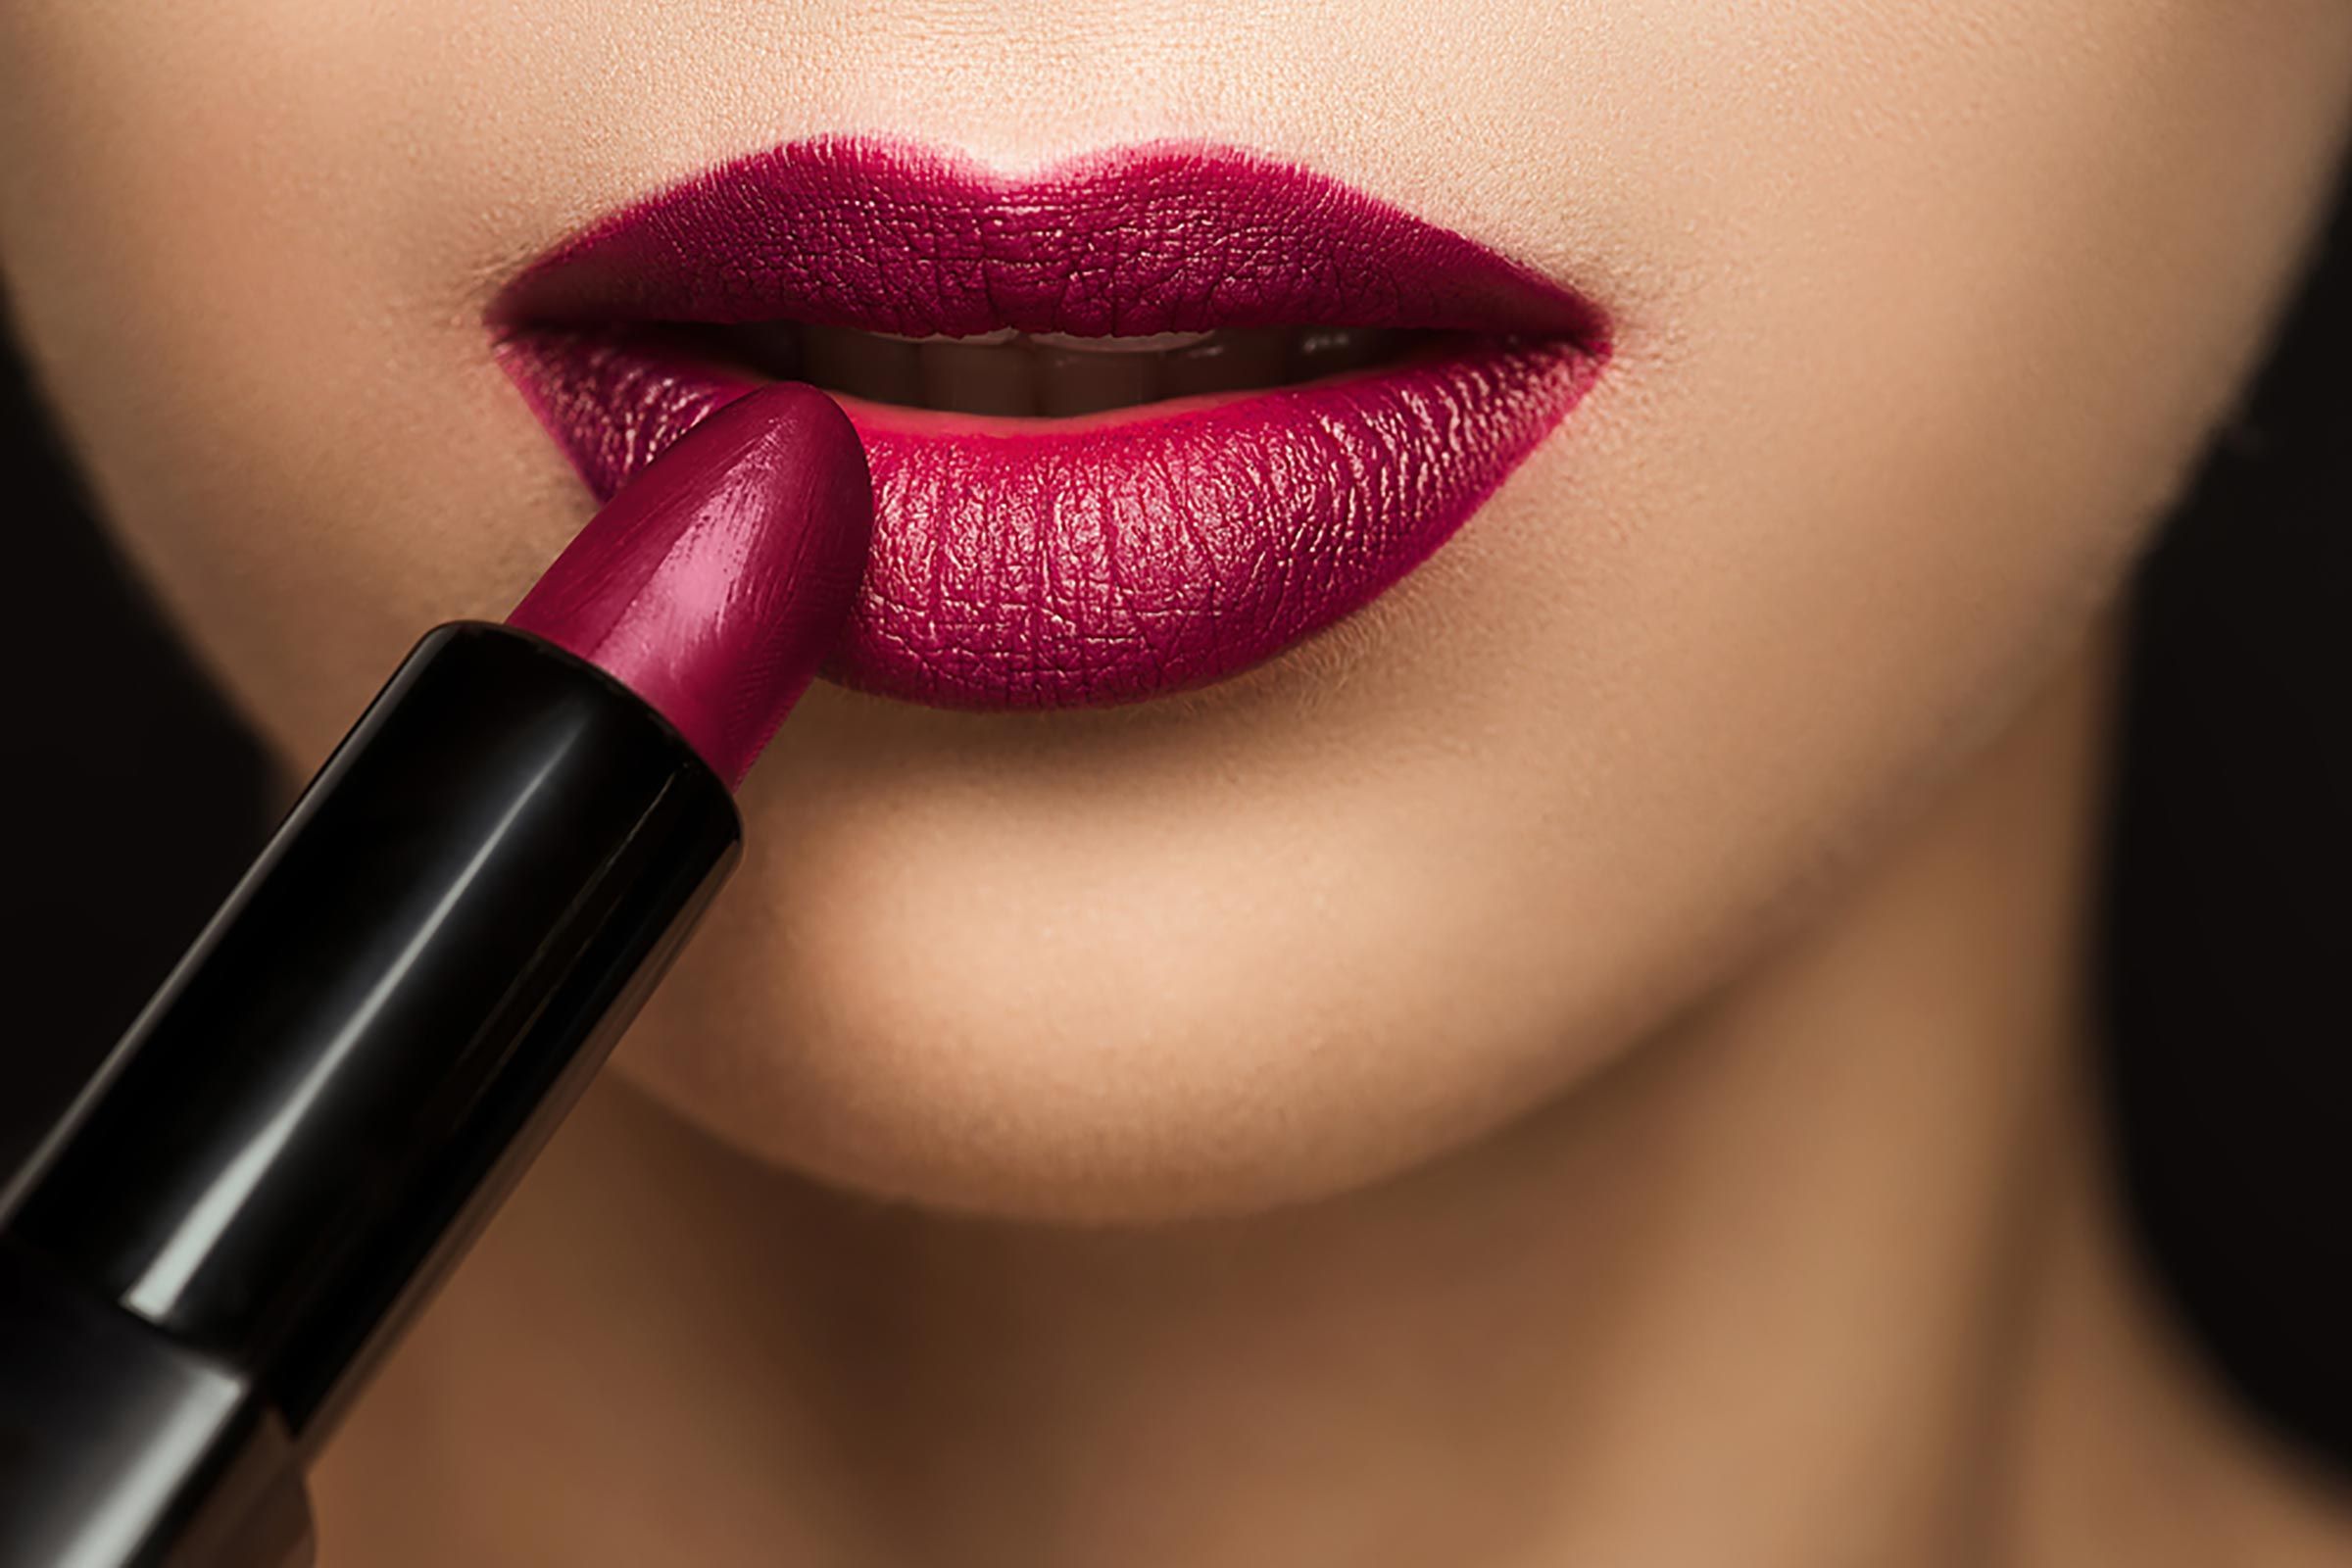 Here's whether luxury lipsticks are worth the splurge